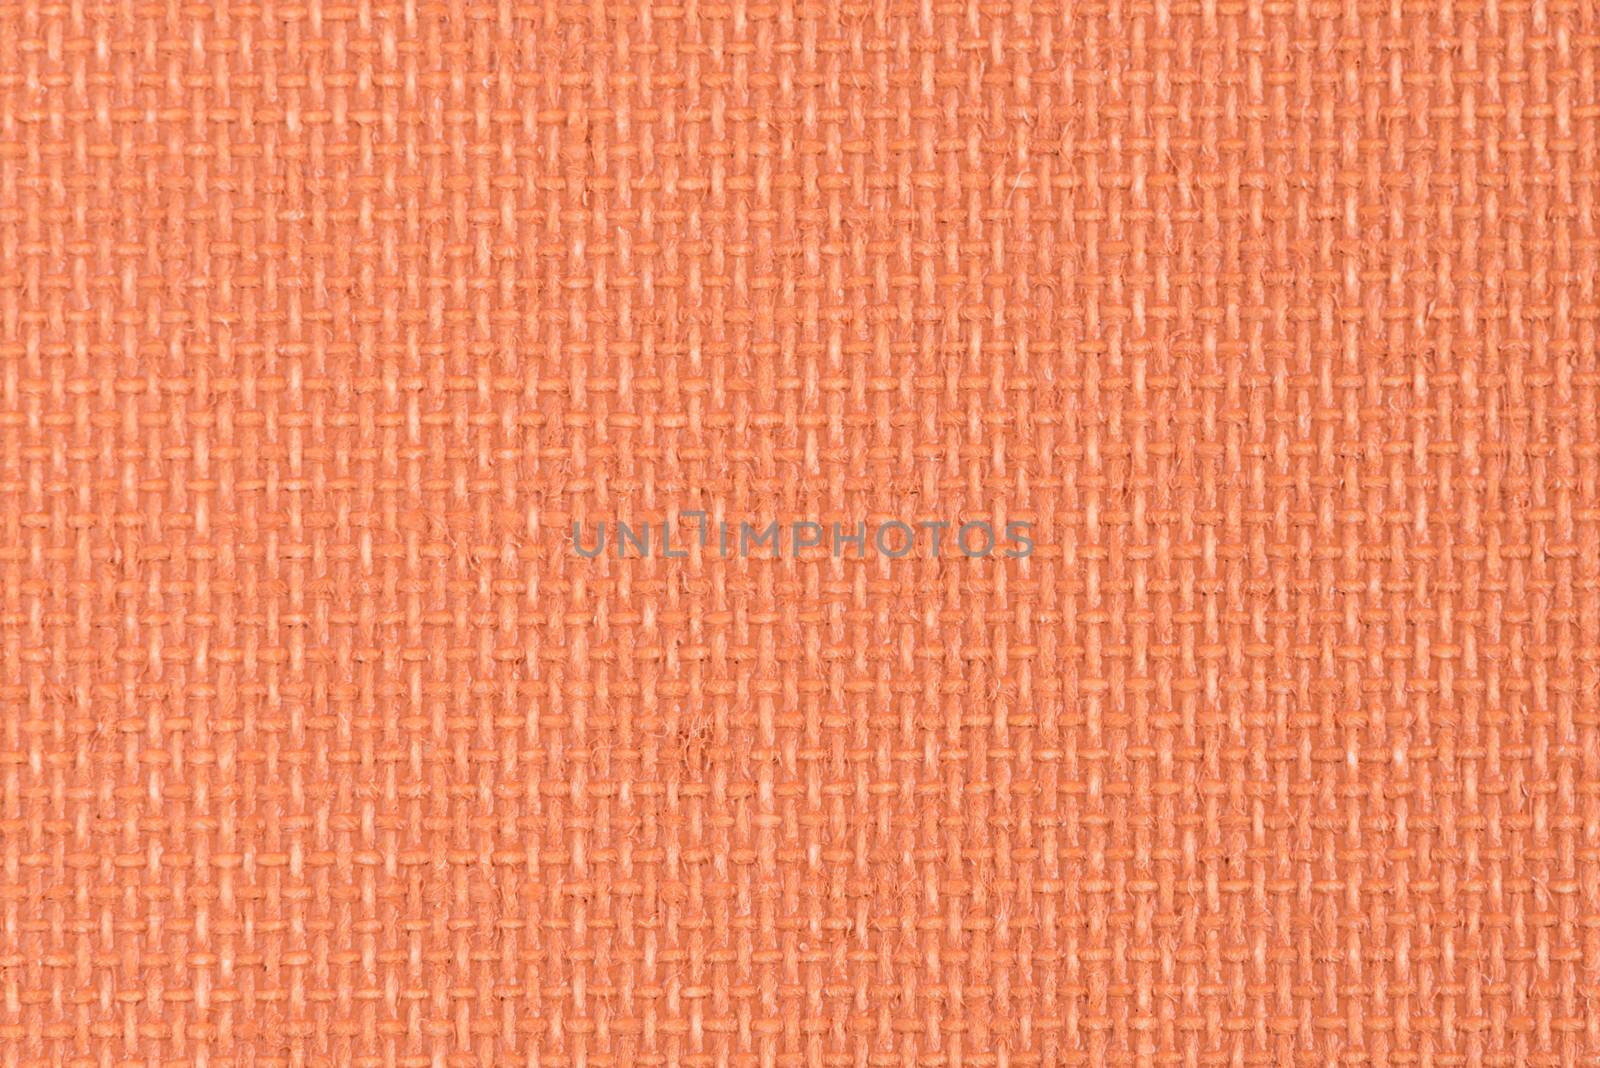 Orange vinyl texture by homydesign